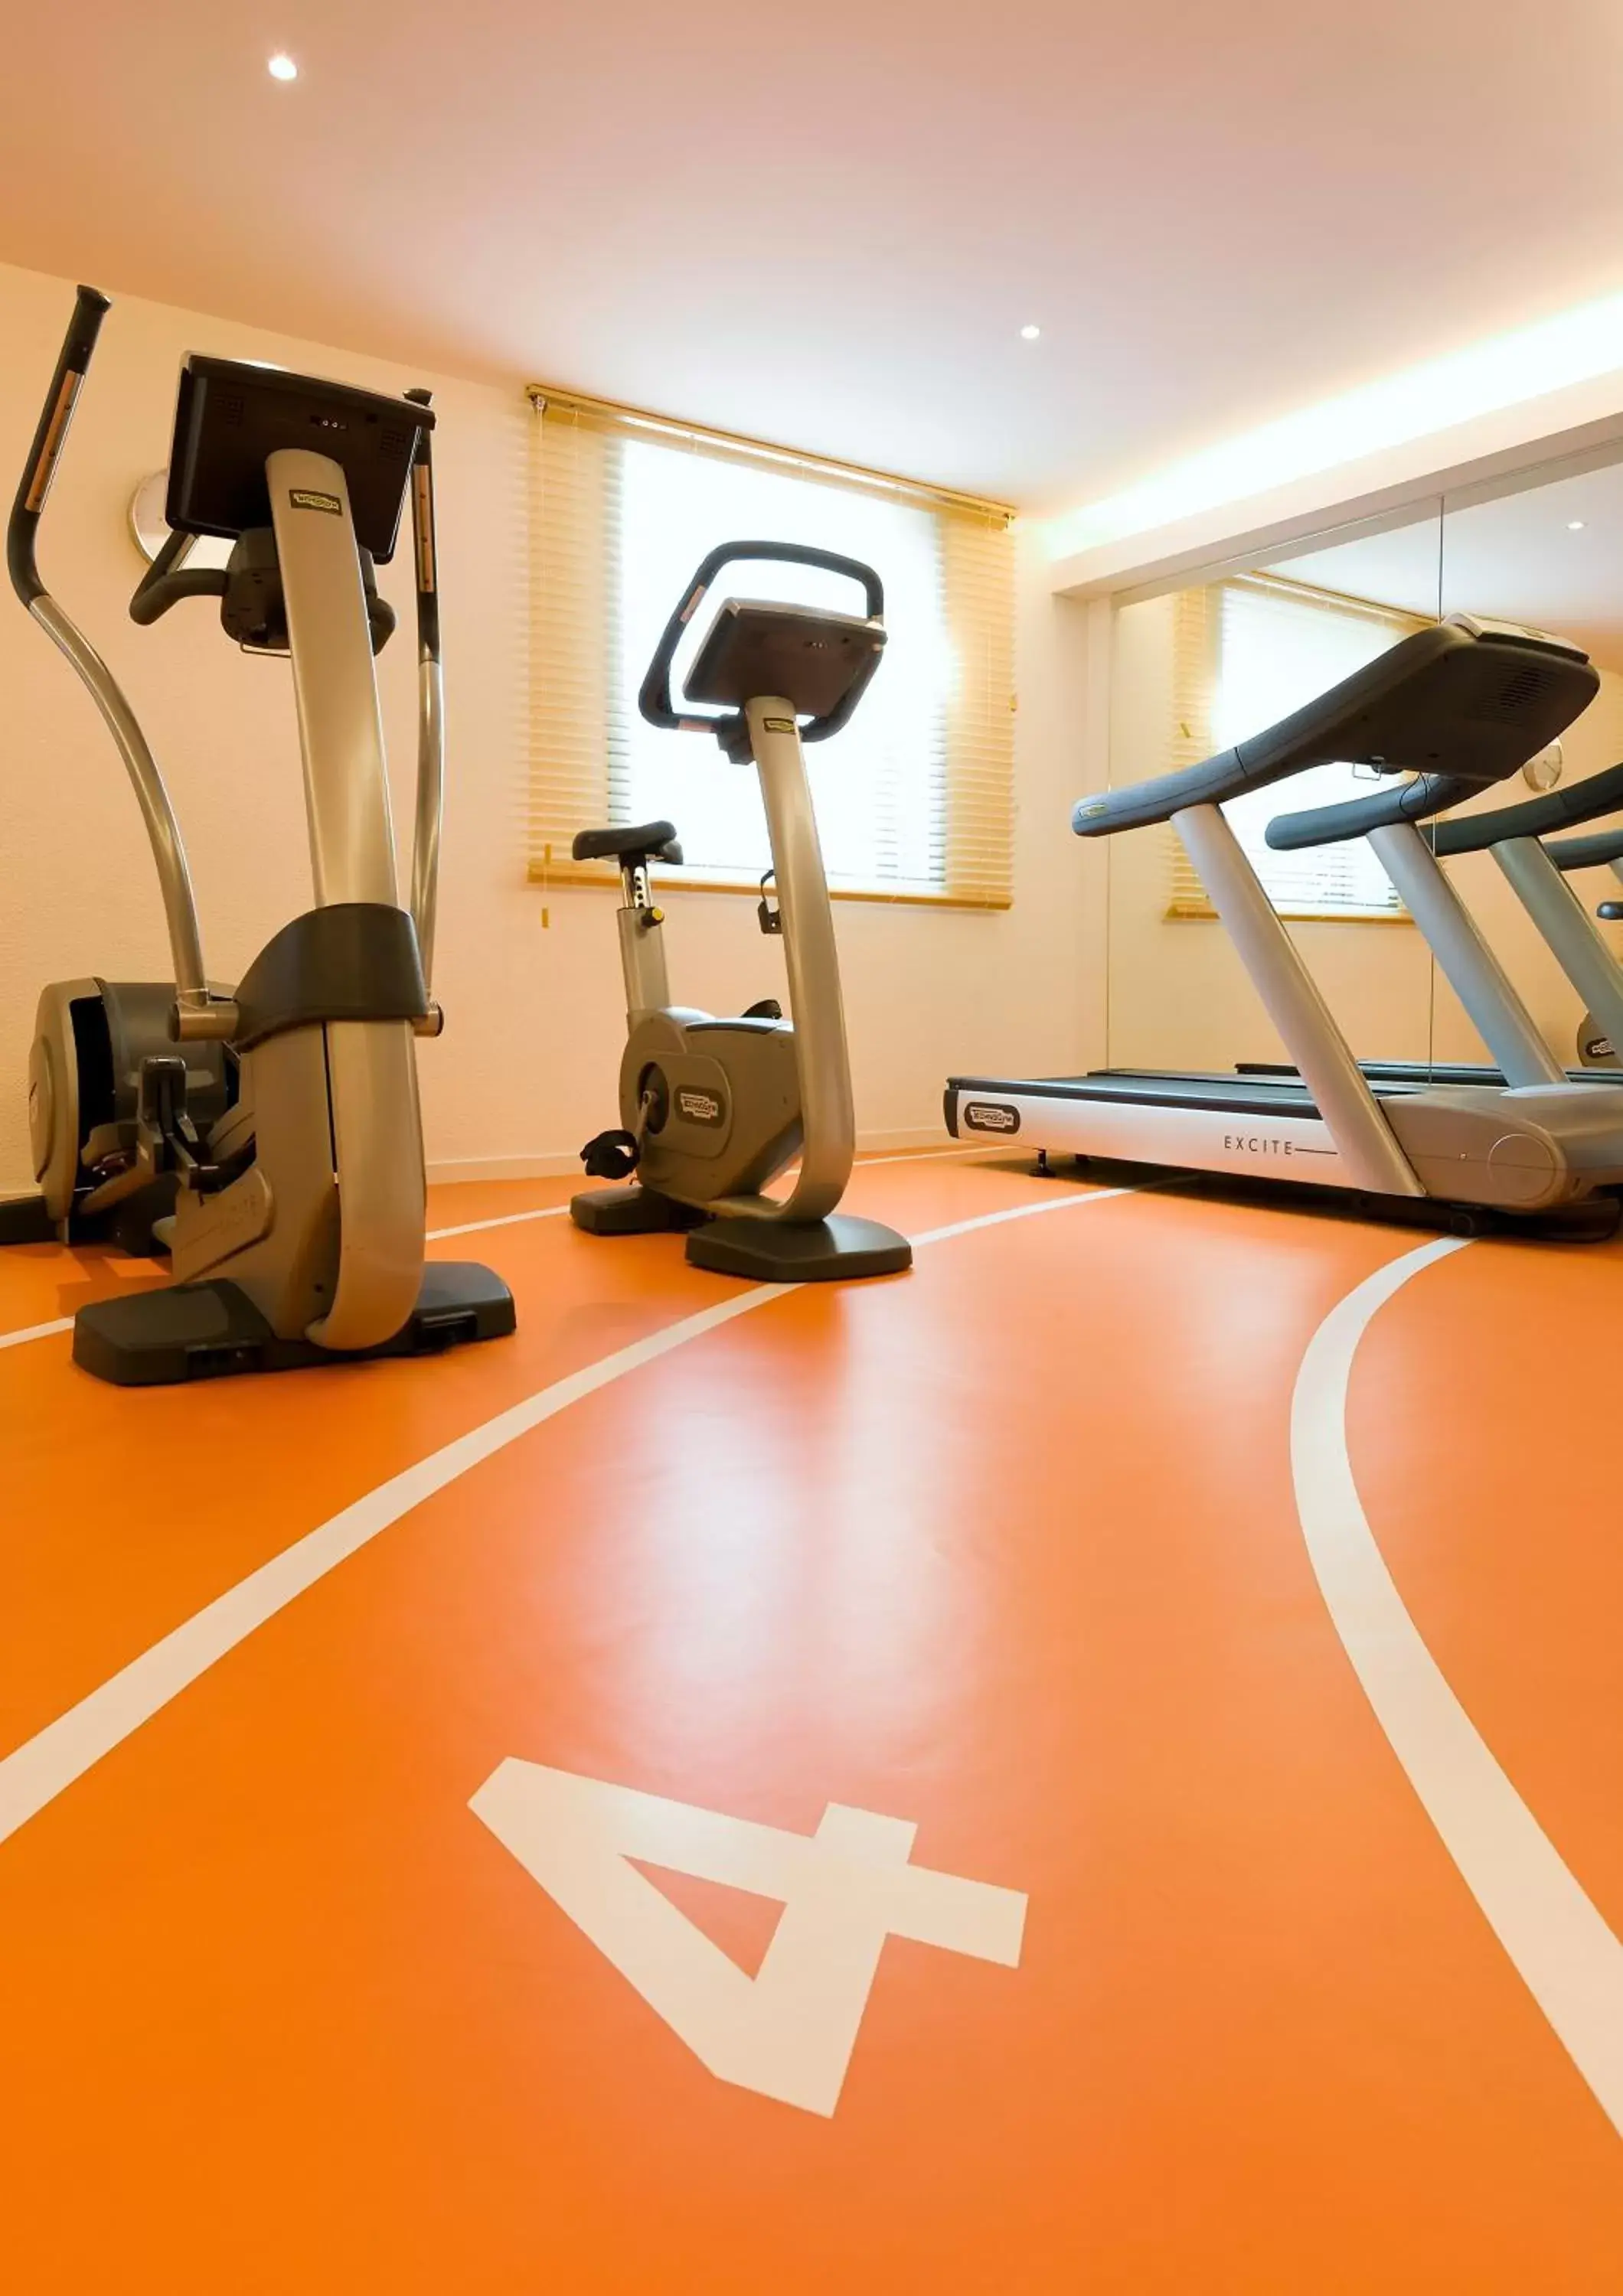 Fitness centre/facilities, Fitness Center/Facilities in Novotel Grenoble Centre